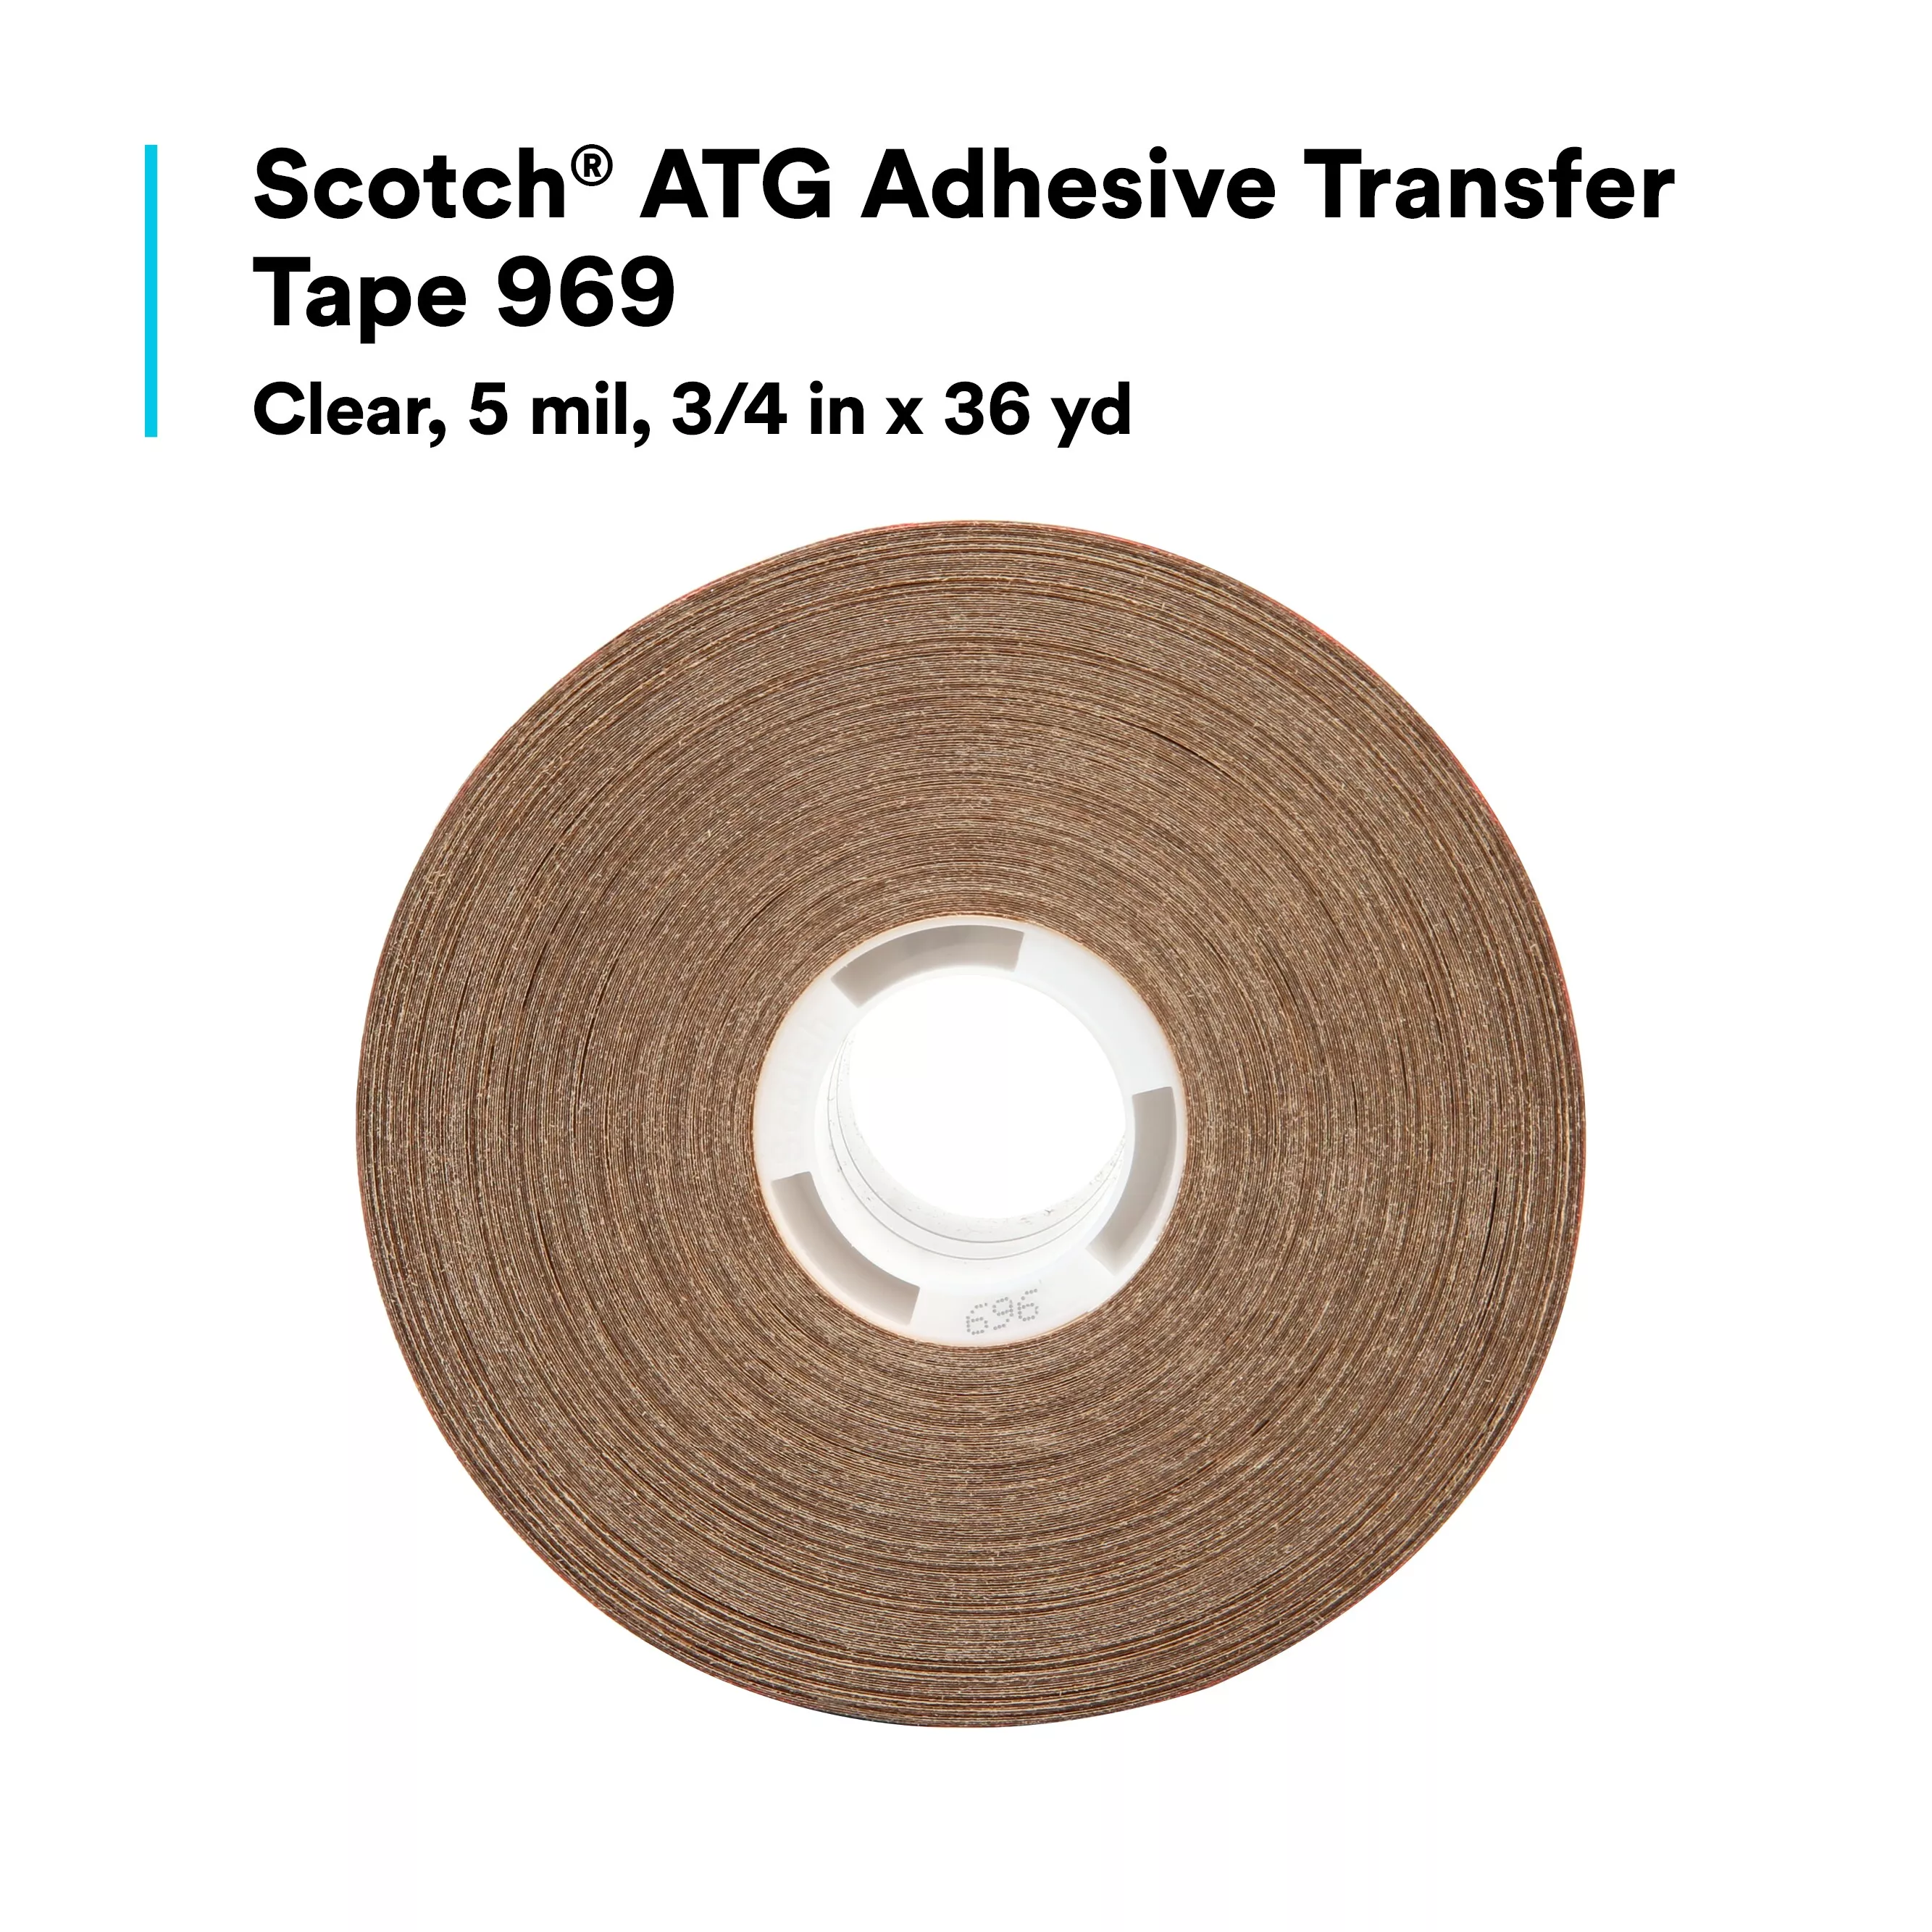 SKU 7000048463 | Scotch® ATG Adhesive Transfer Tape 969